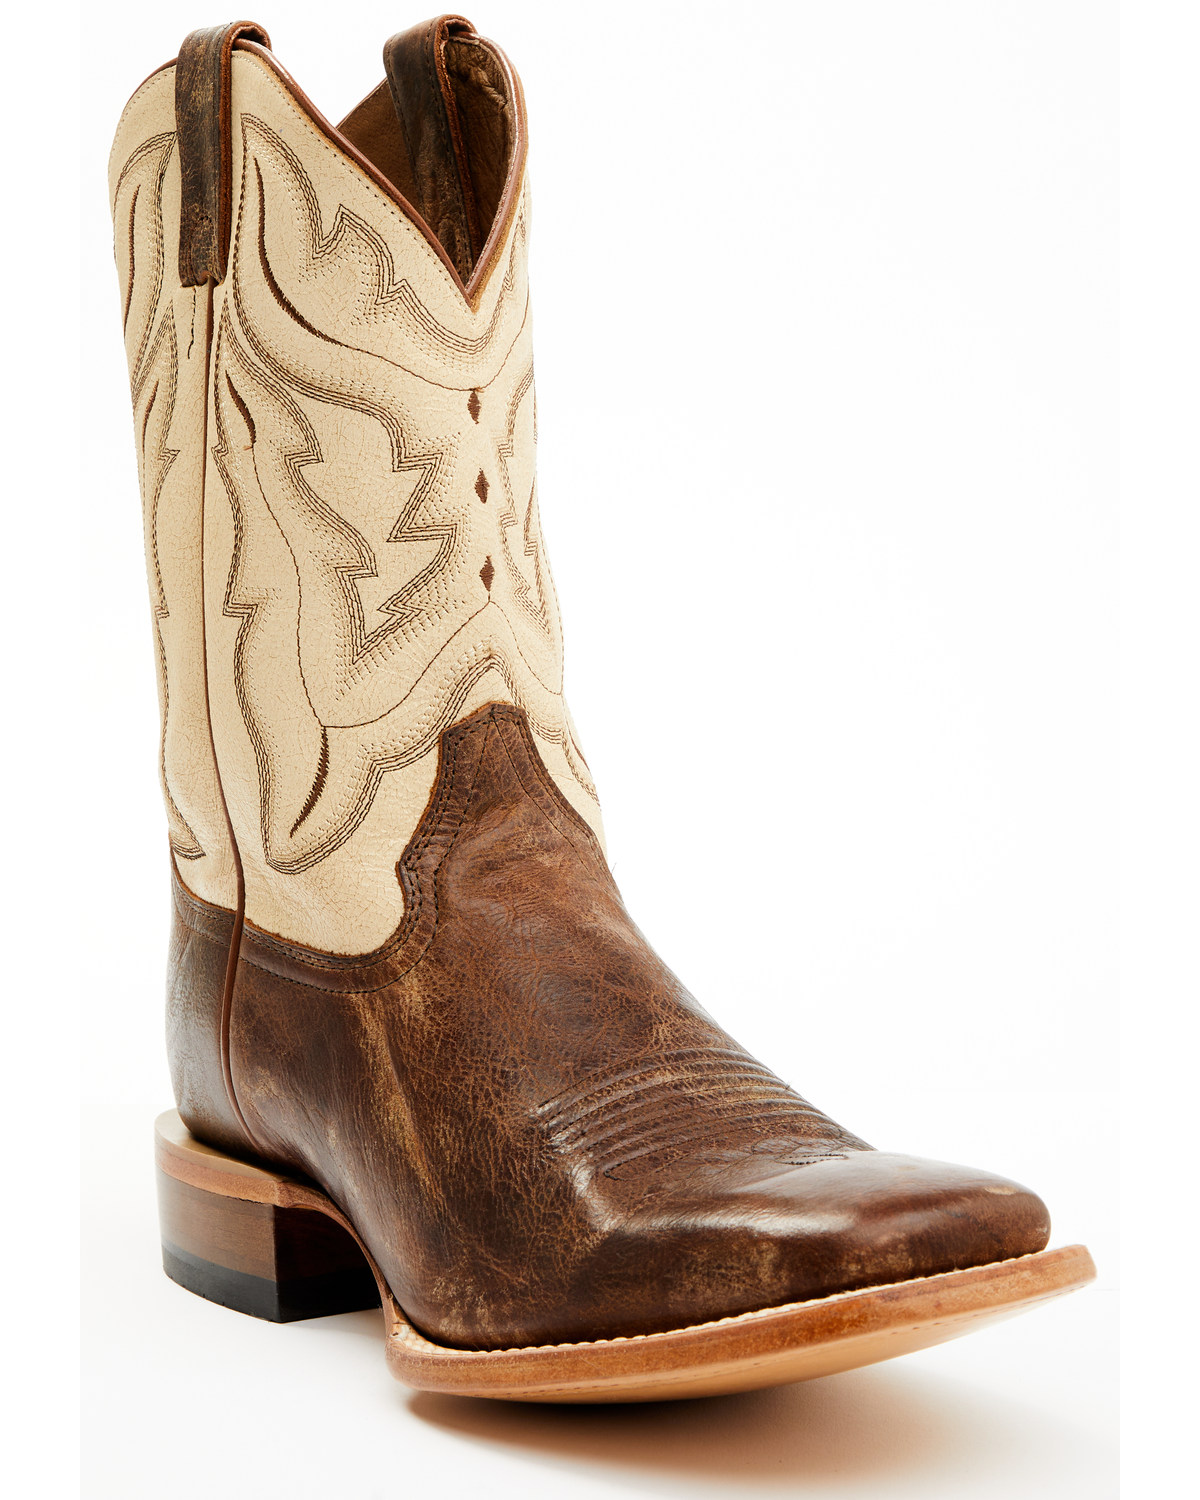 Cody James Men's Bone Western Boots - Broad Square Toe